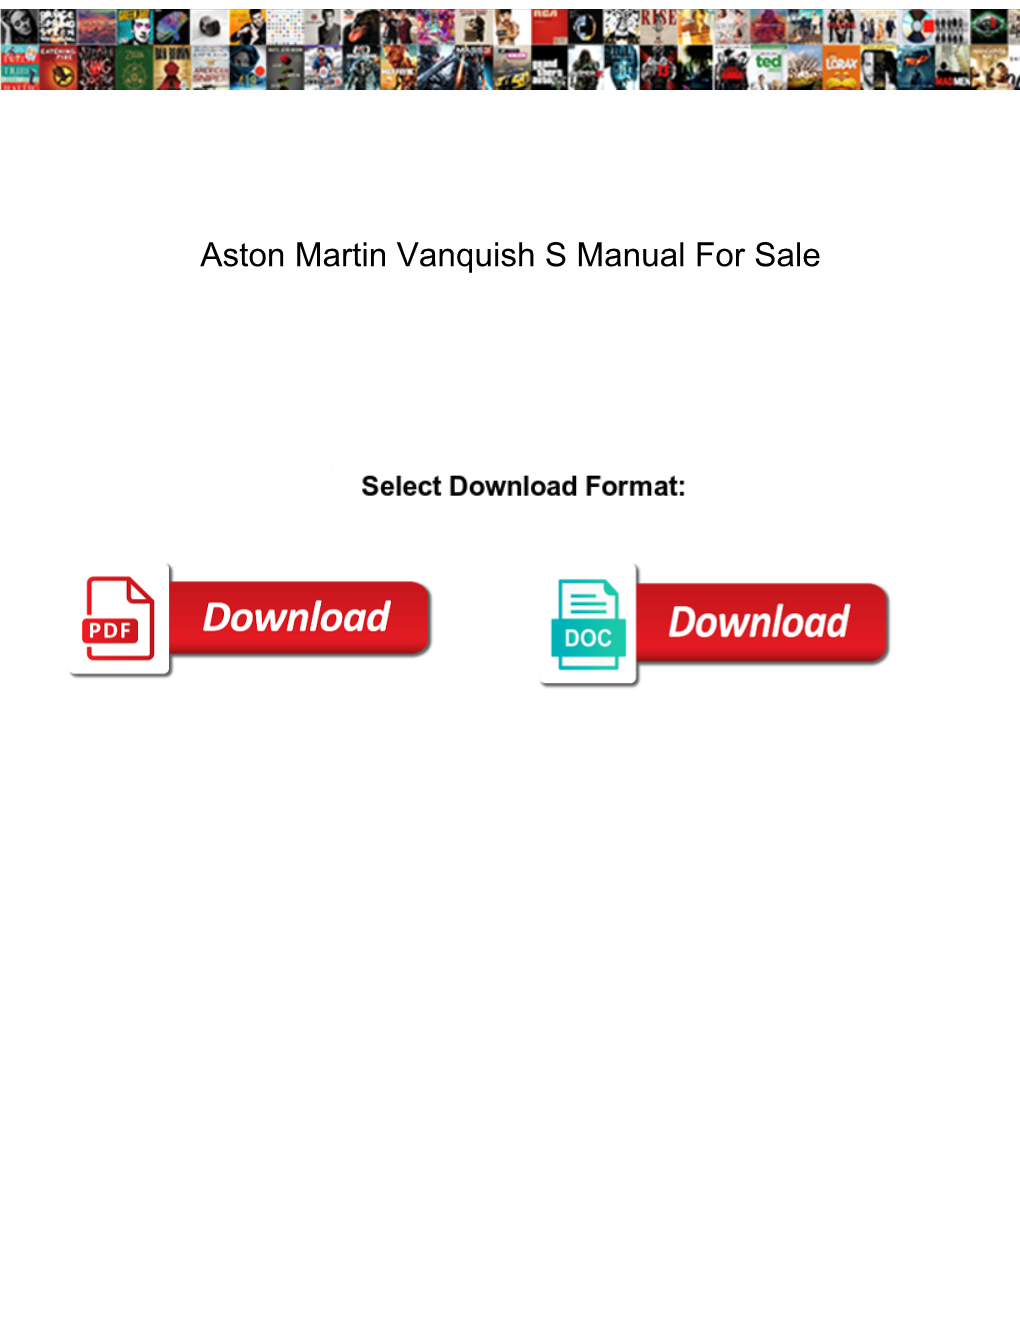 Aston Martin Vanquish S Manual for Sale